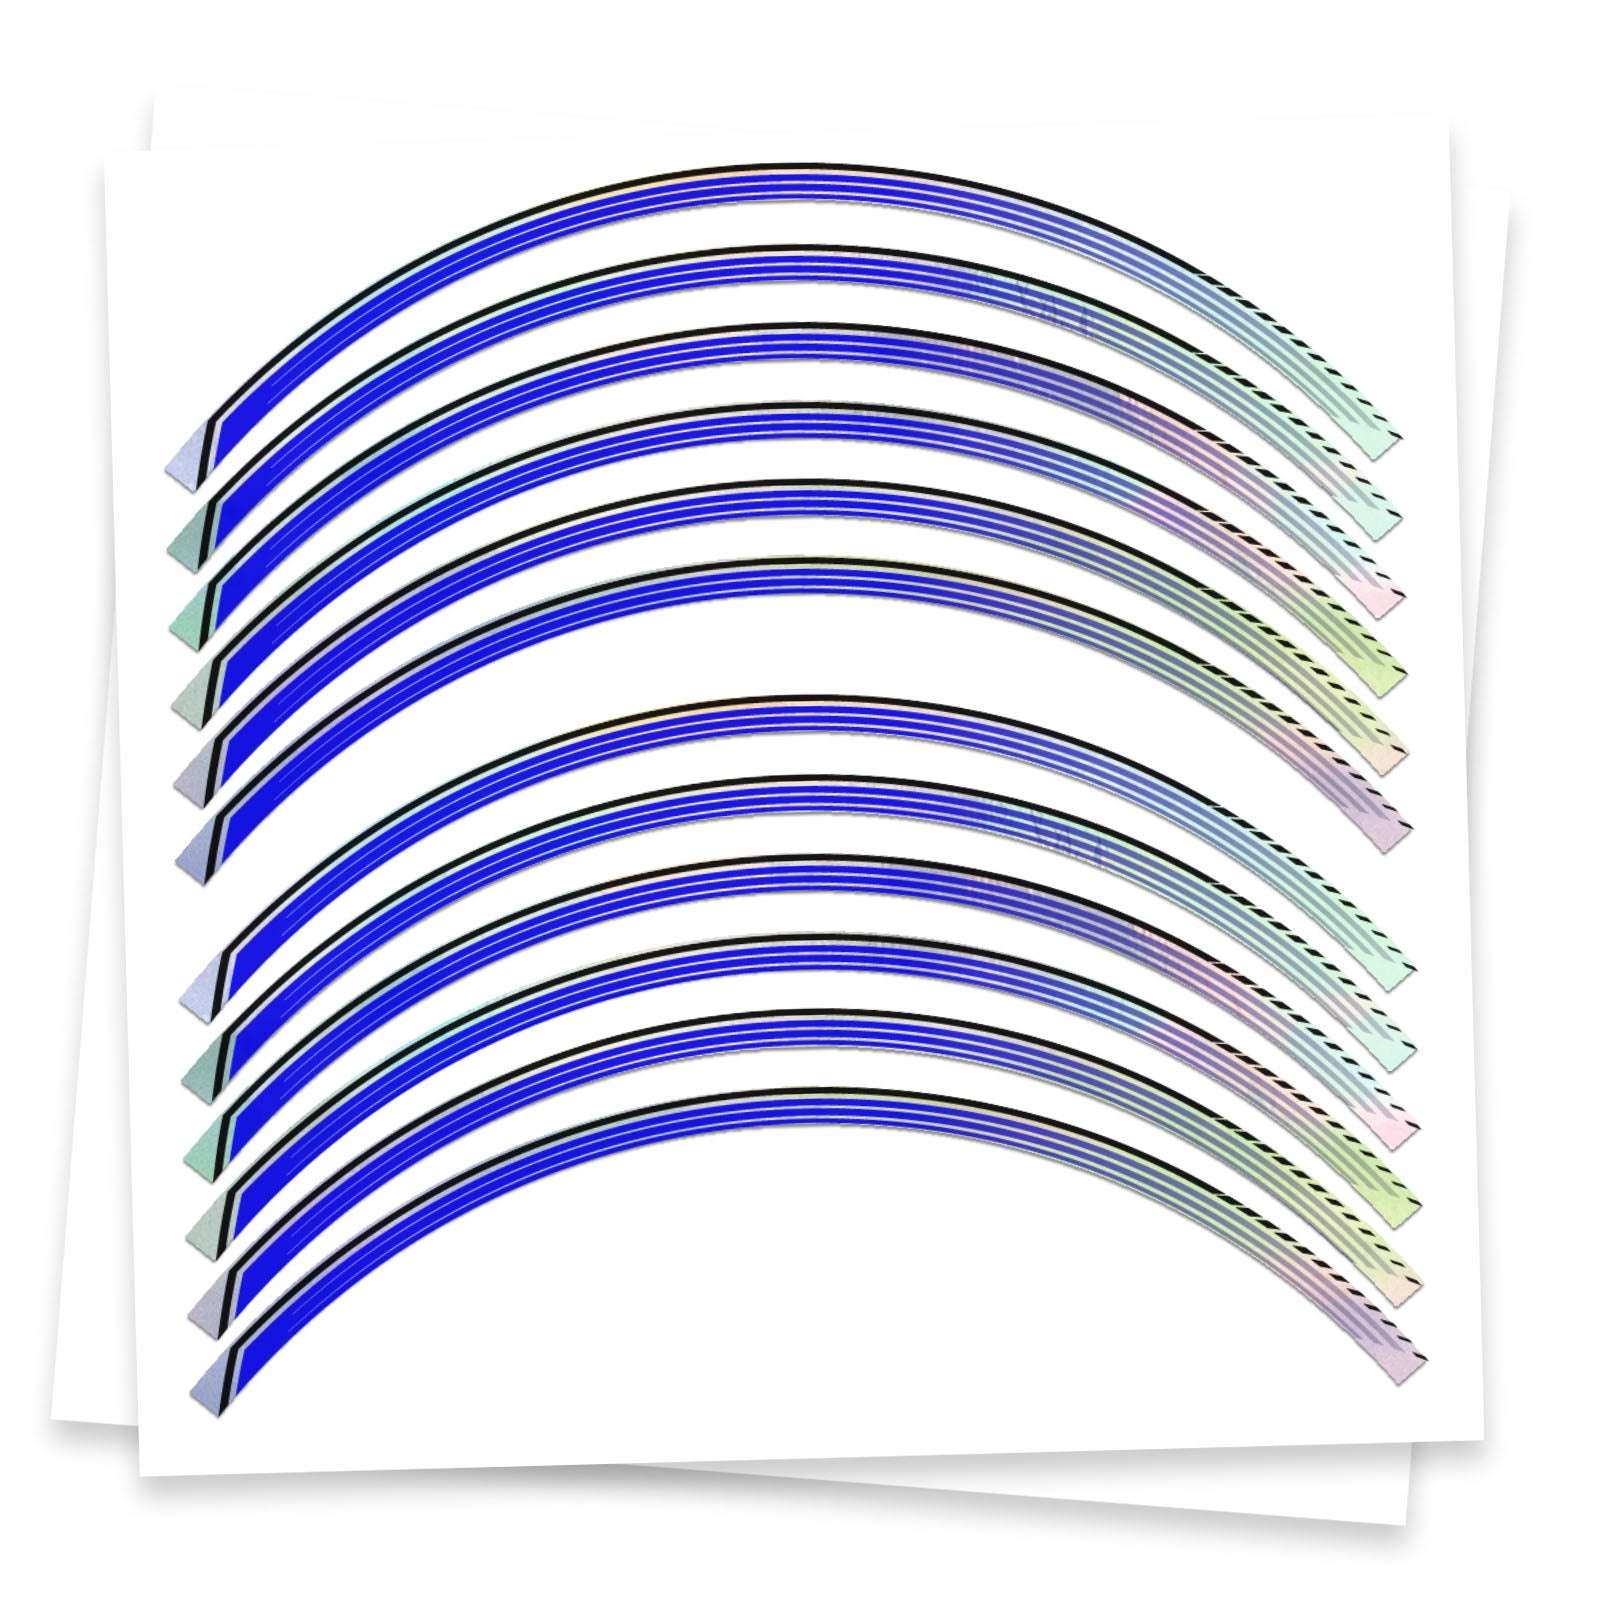 Purple Chrome Holographic Wheel Stickers J12 Rim Skin Decal Strip